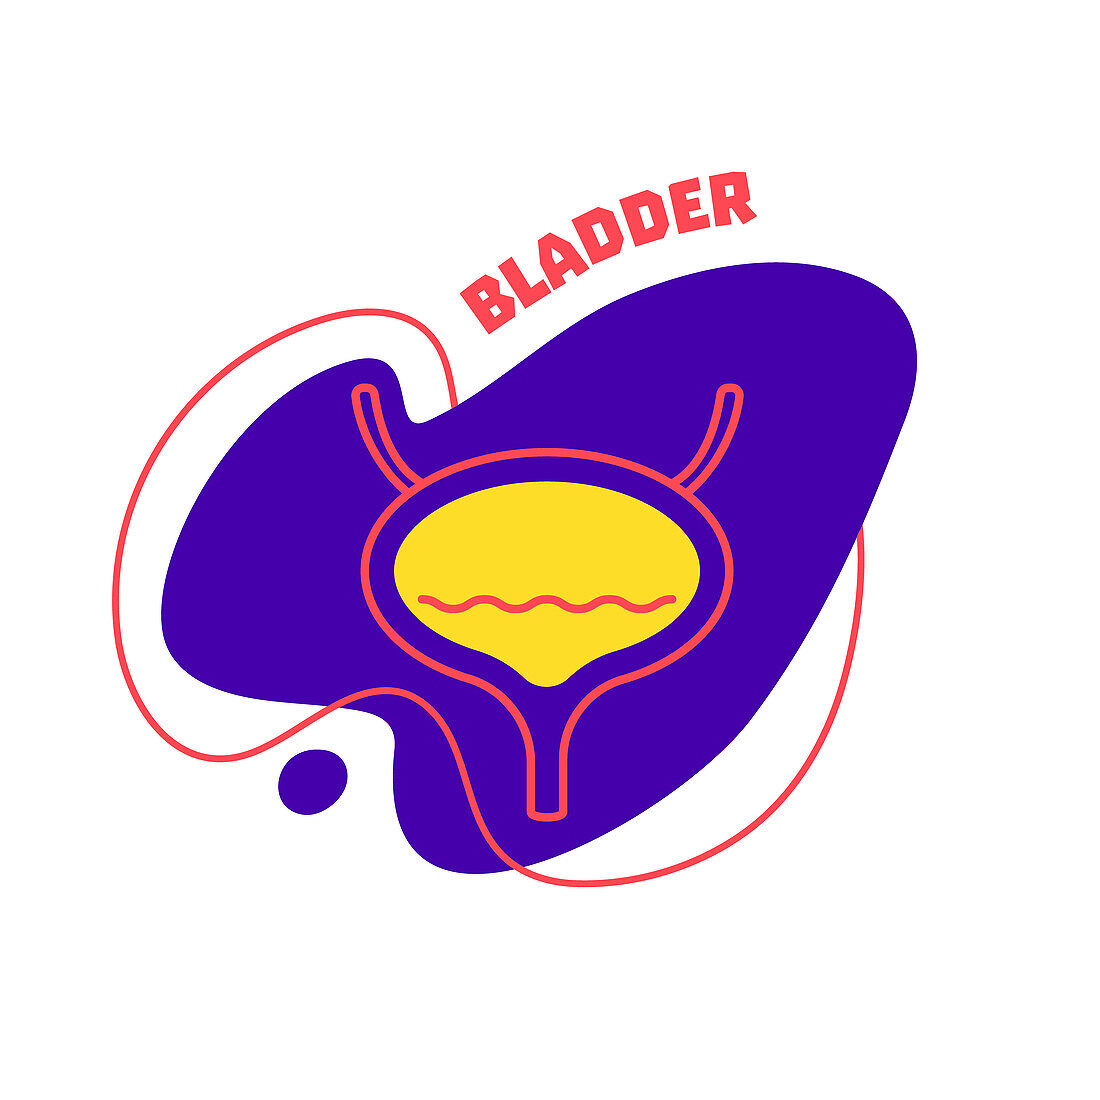 Human bladder, conceptual illustration